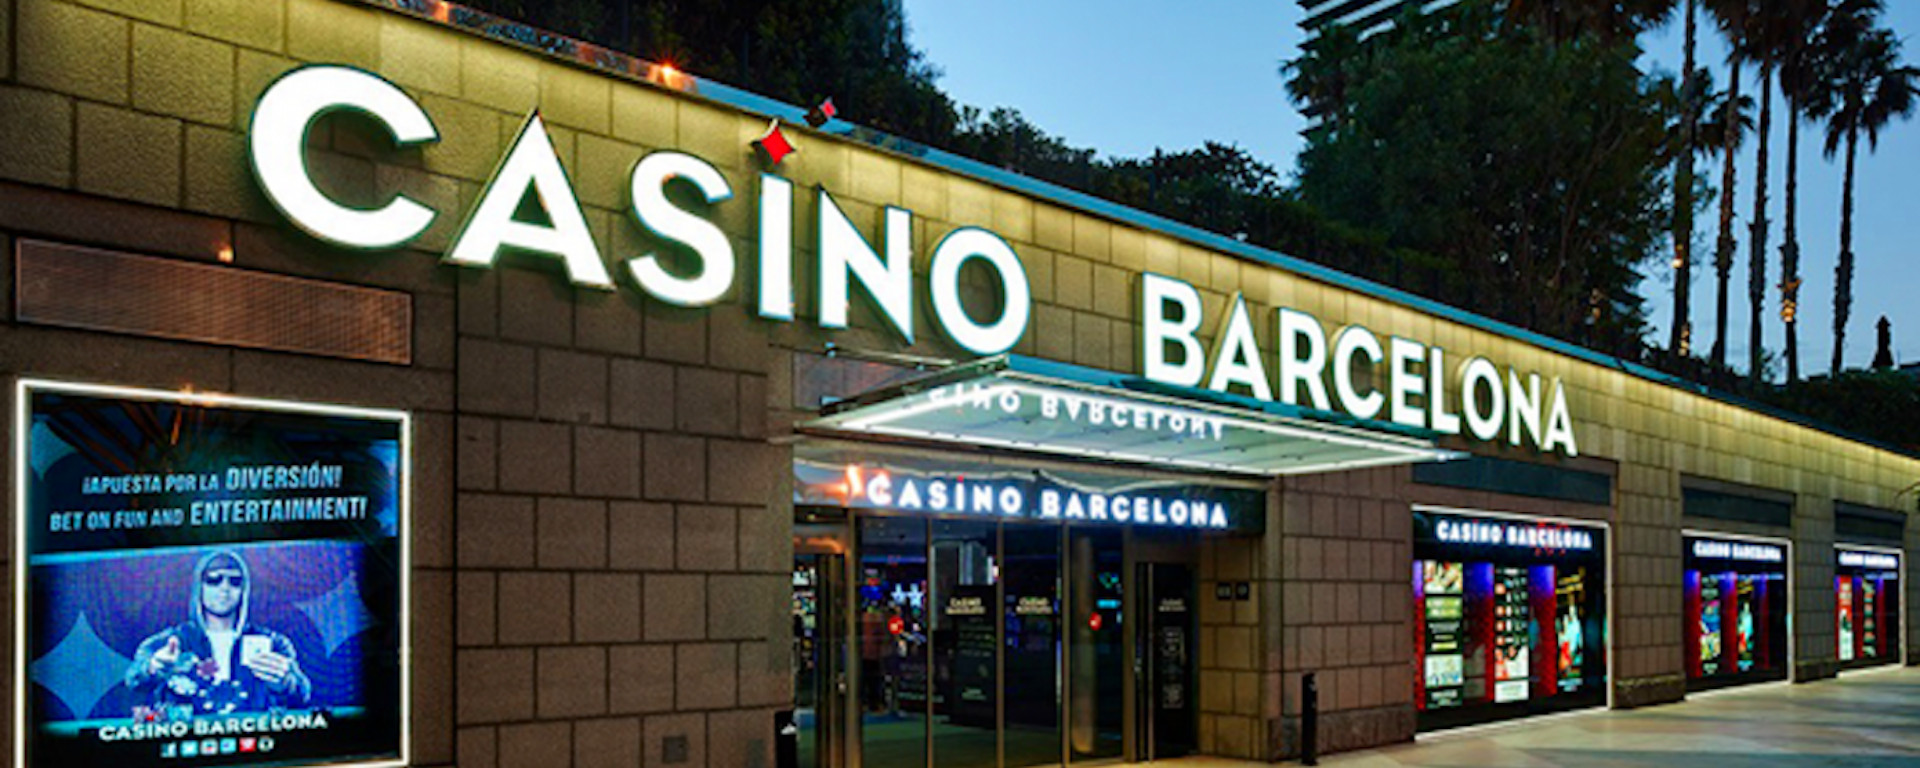 El casino de Barcelona / MA